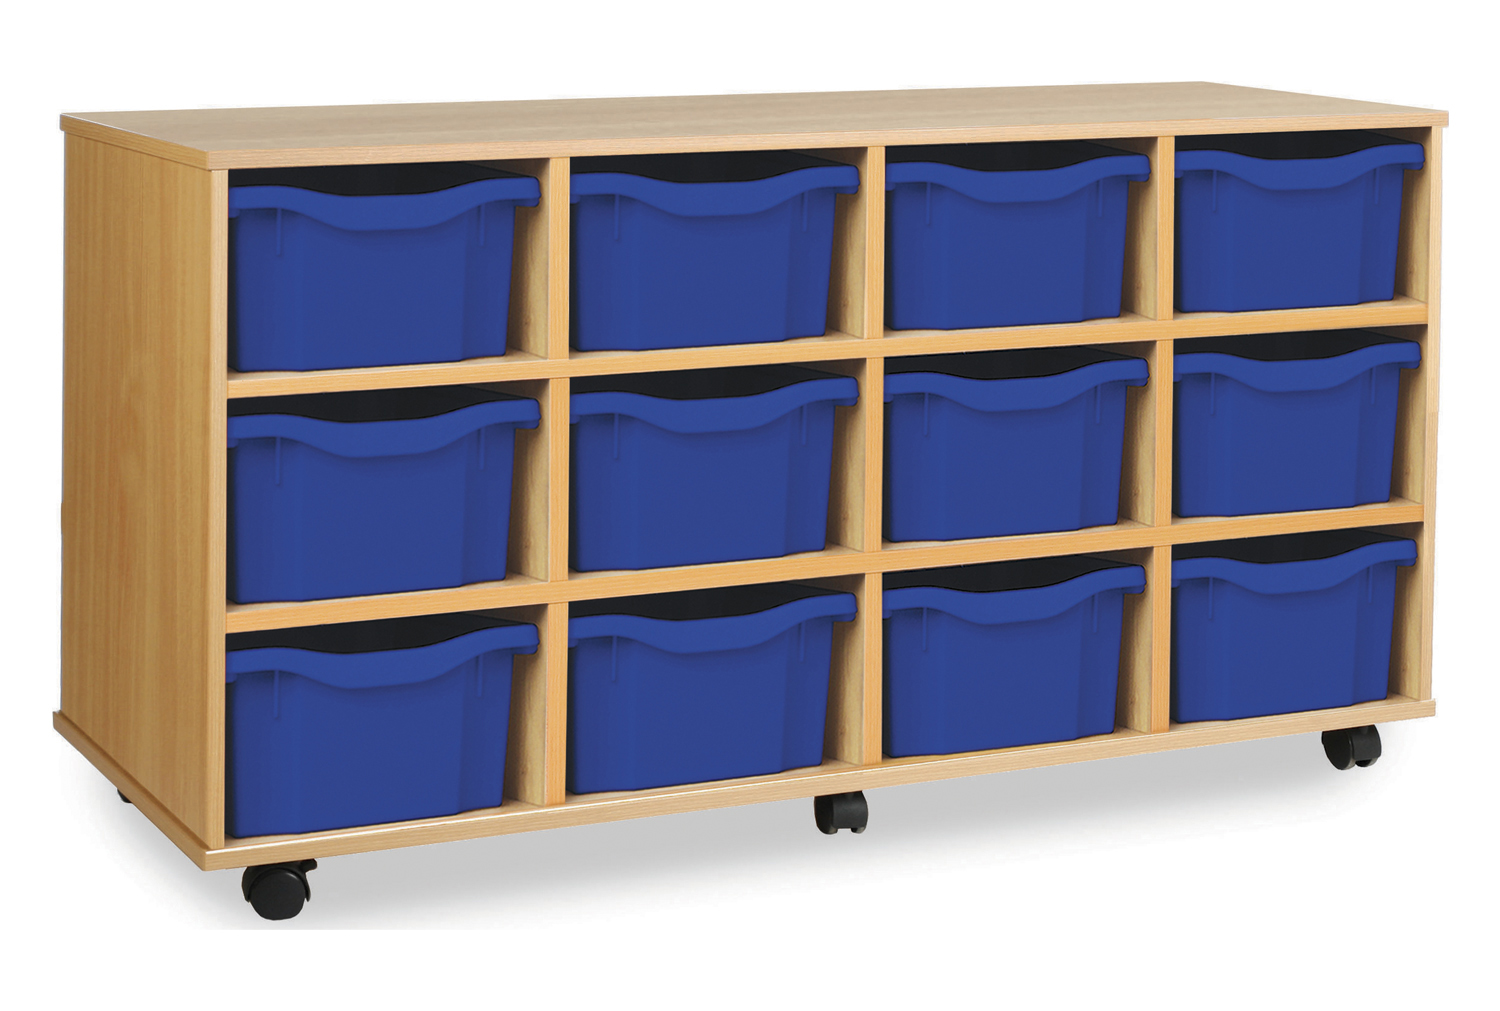 12 Deep School Classroom Tray Storage Unit, Red/Blue/Yellow School Classroom Trays